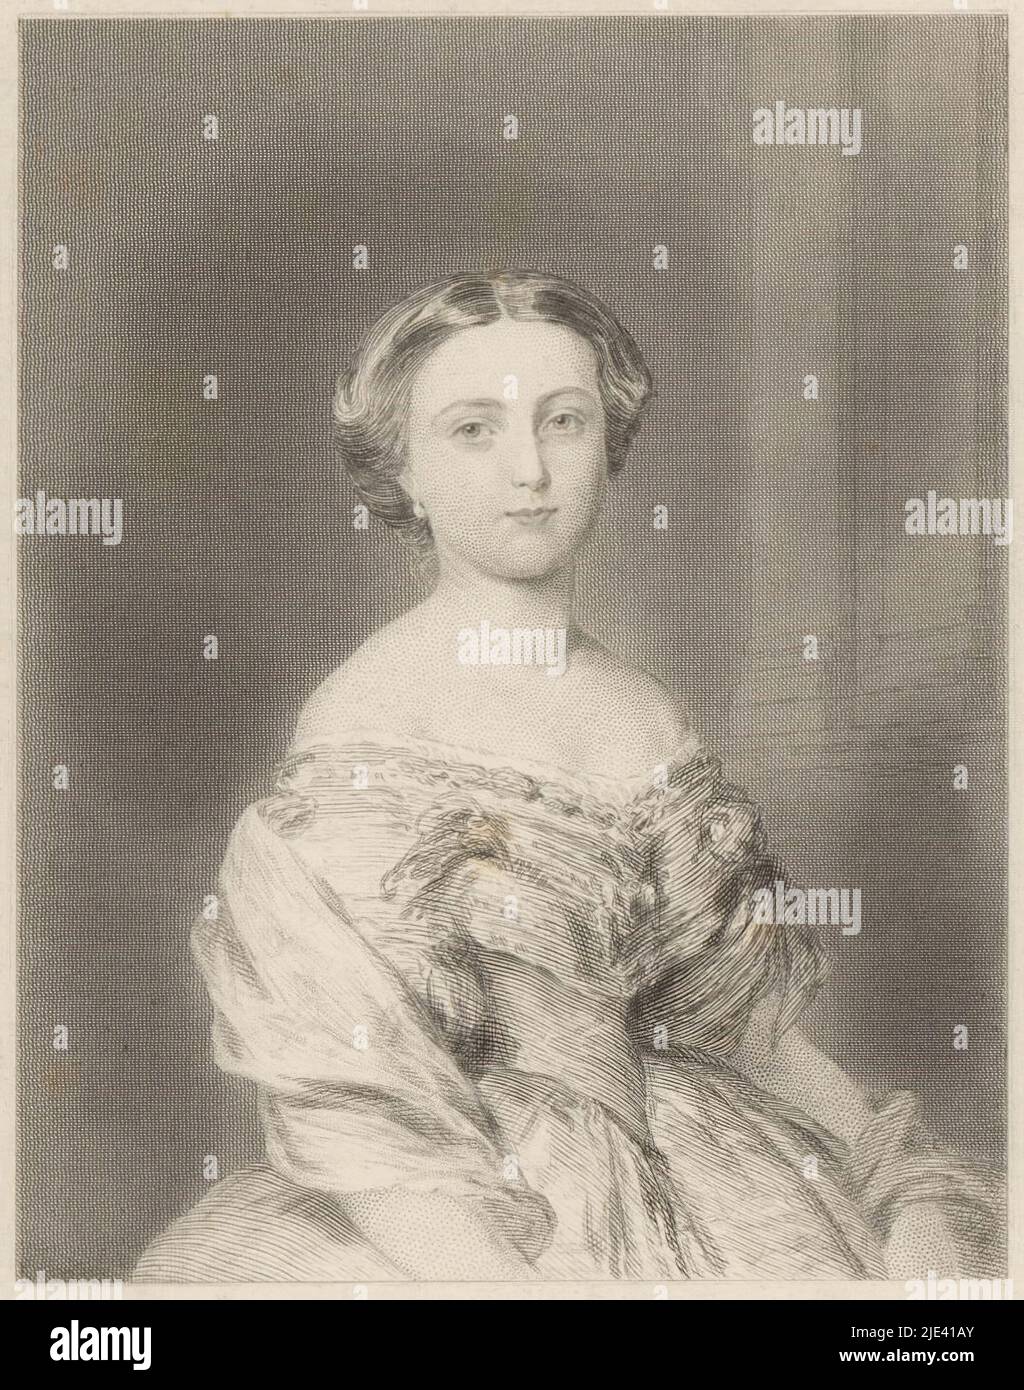 Retrato de Victoria de Saxe-Coburg y Gotha, emperatriz alemana, Hermann Sagert, 1832 - 1889, imprenta: Hermann Sagert, 1832 - 1889, papel, grabado de acero, h 1897 mm - w 149 mm Foto de stock